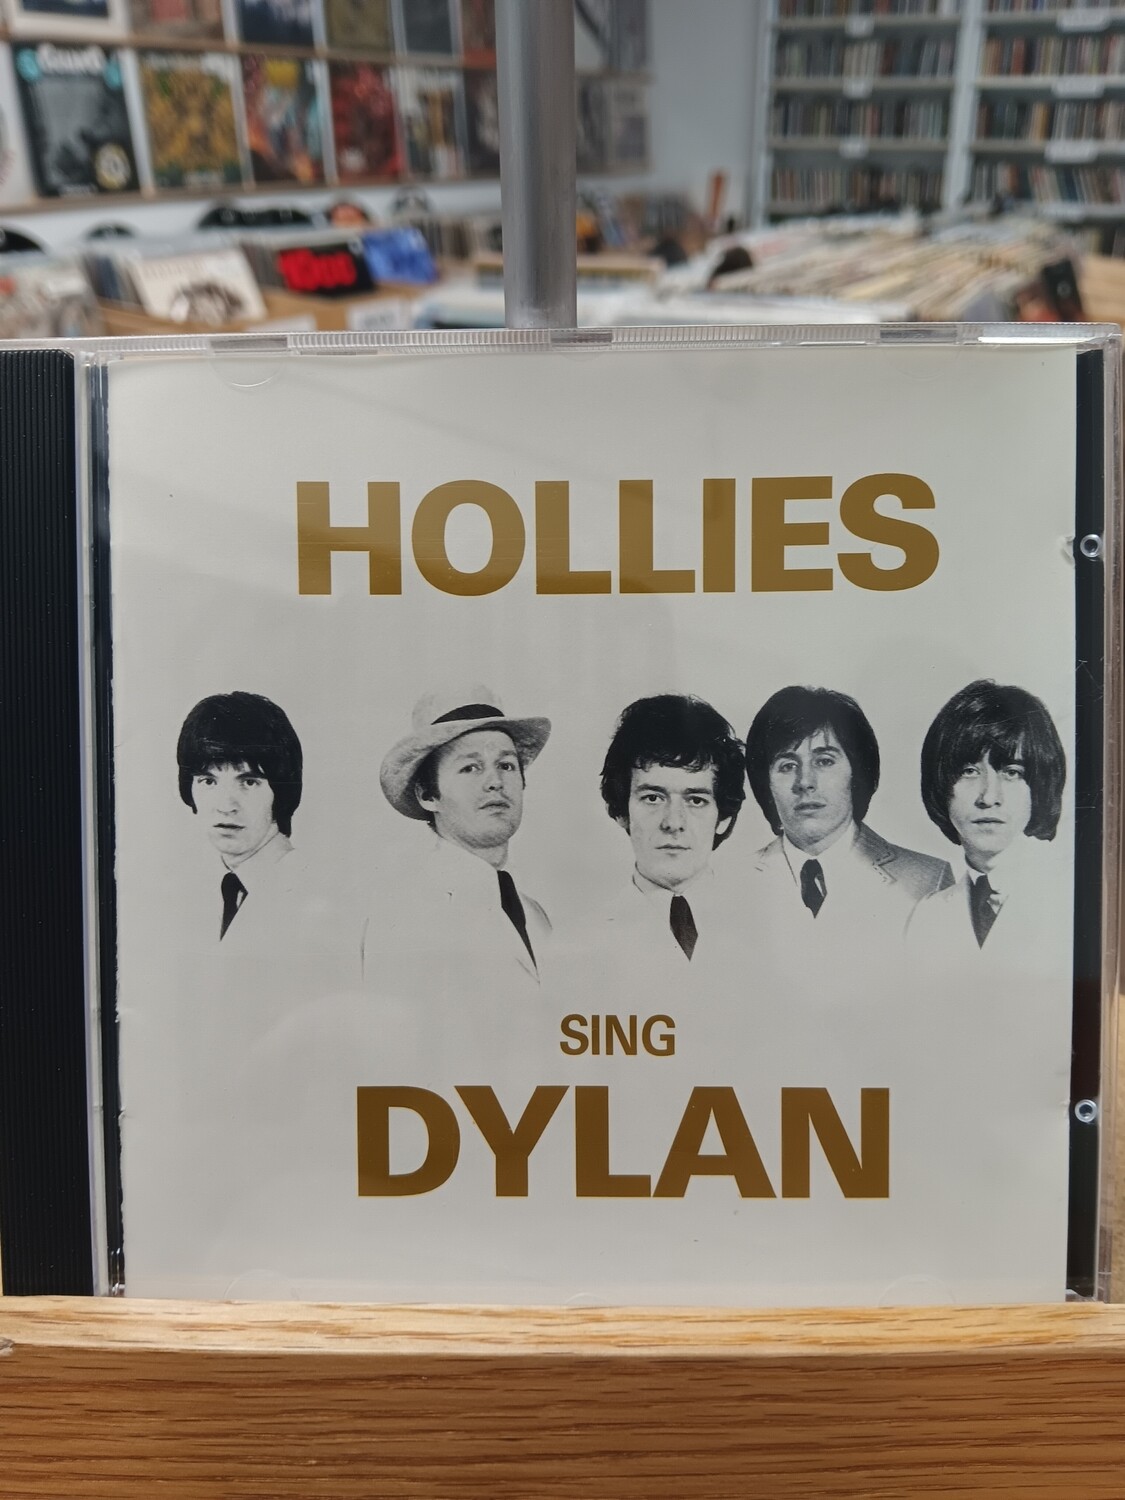 THE HOLLIES - Hollies sing Dylan (CD)